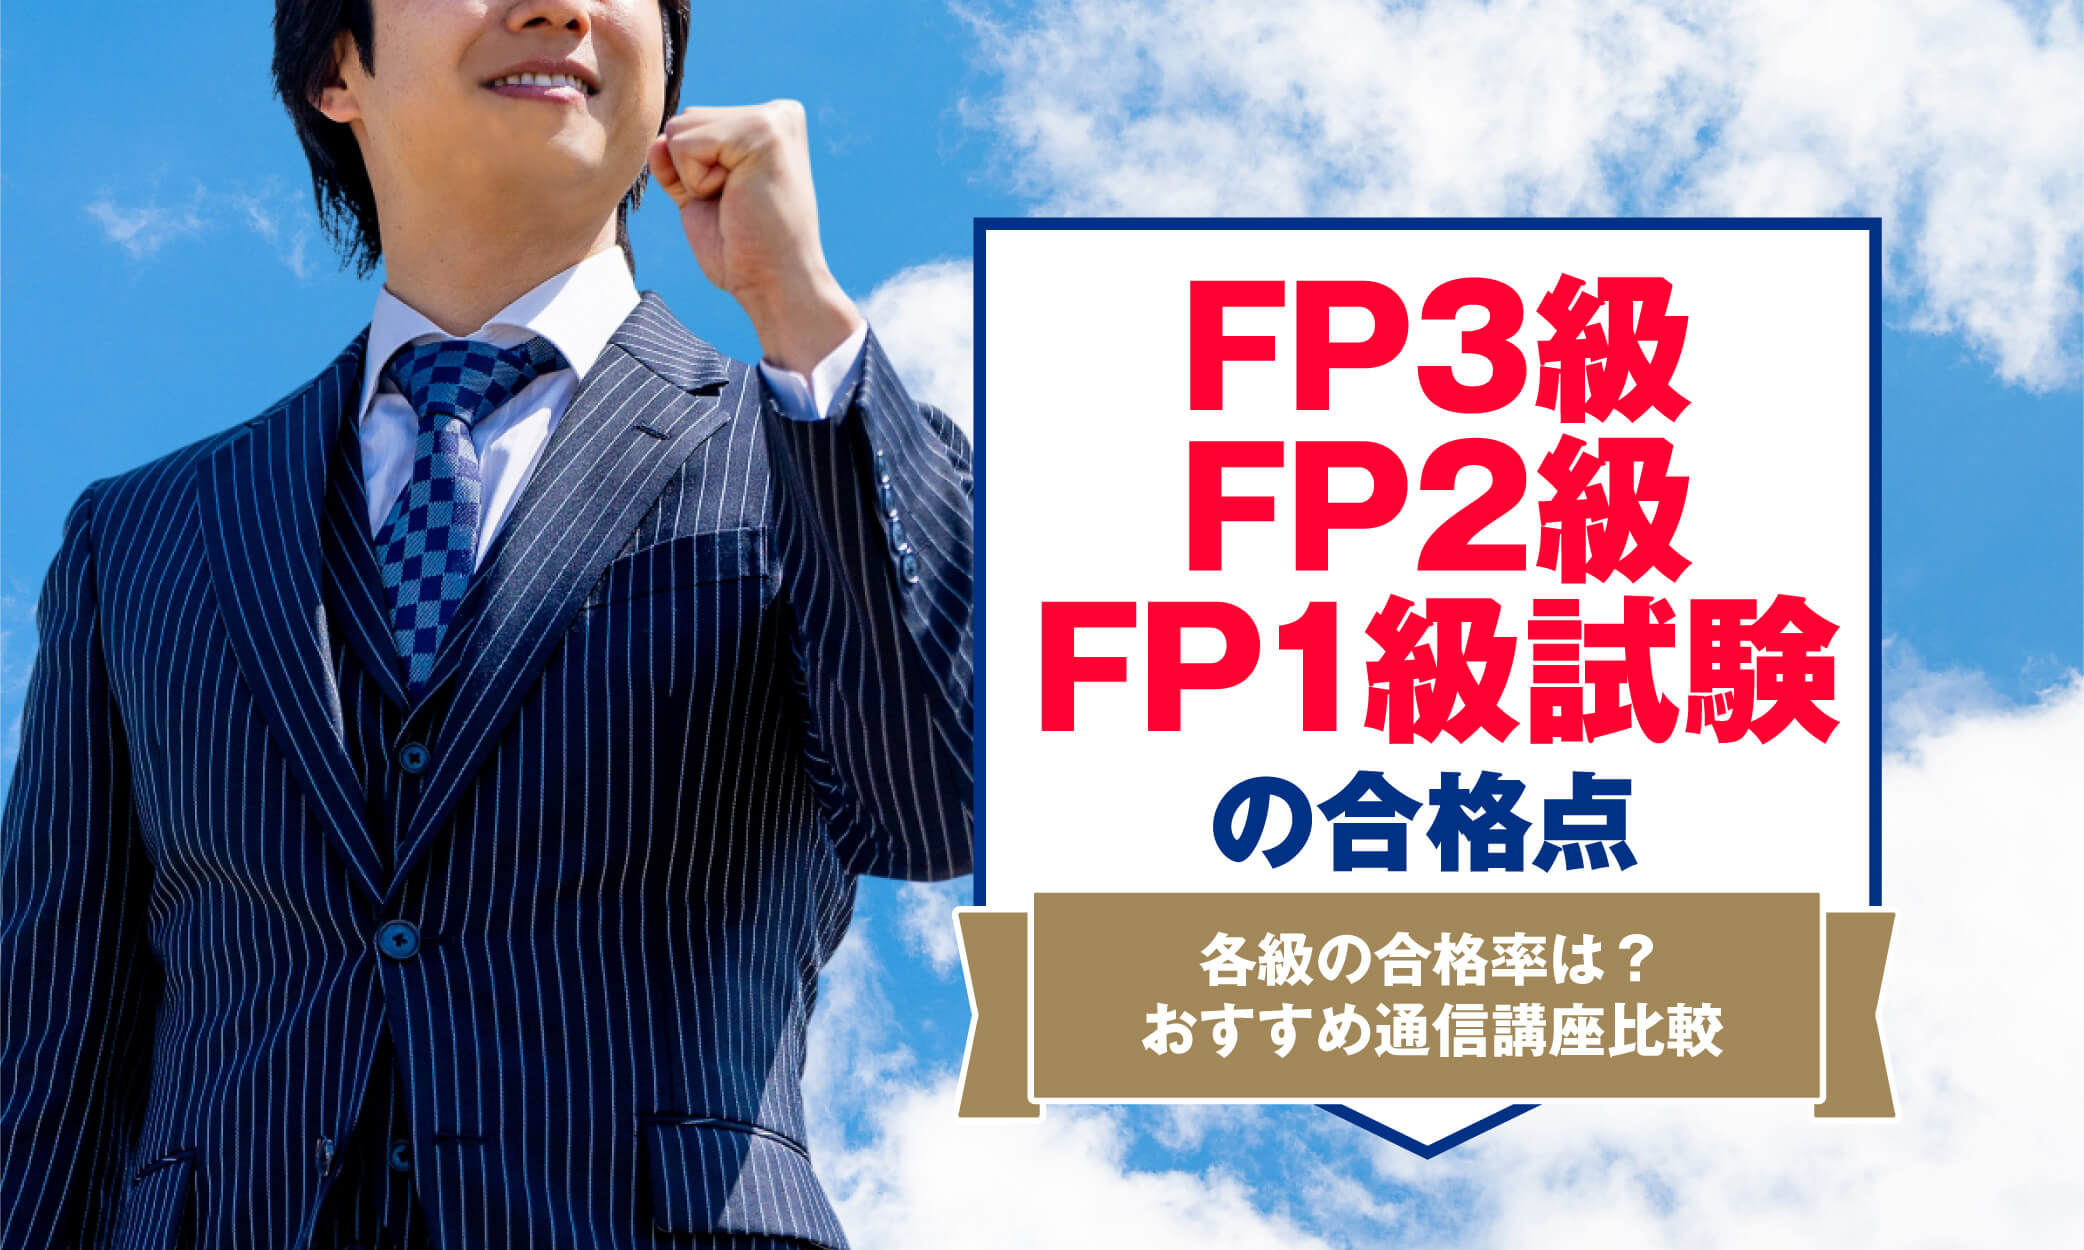 FP3級、FP2級、FP1級試験の合格点をまとめて紹介